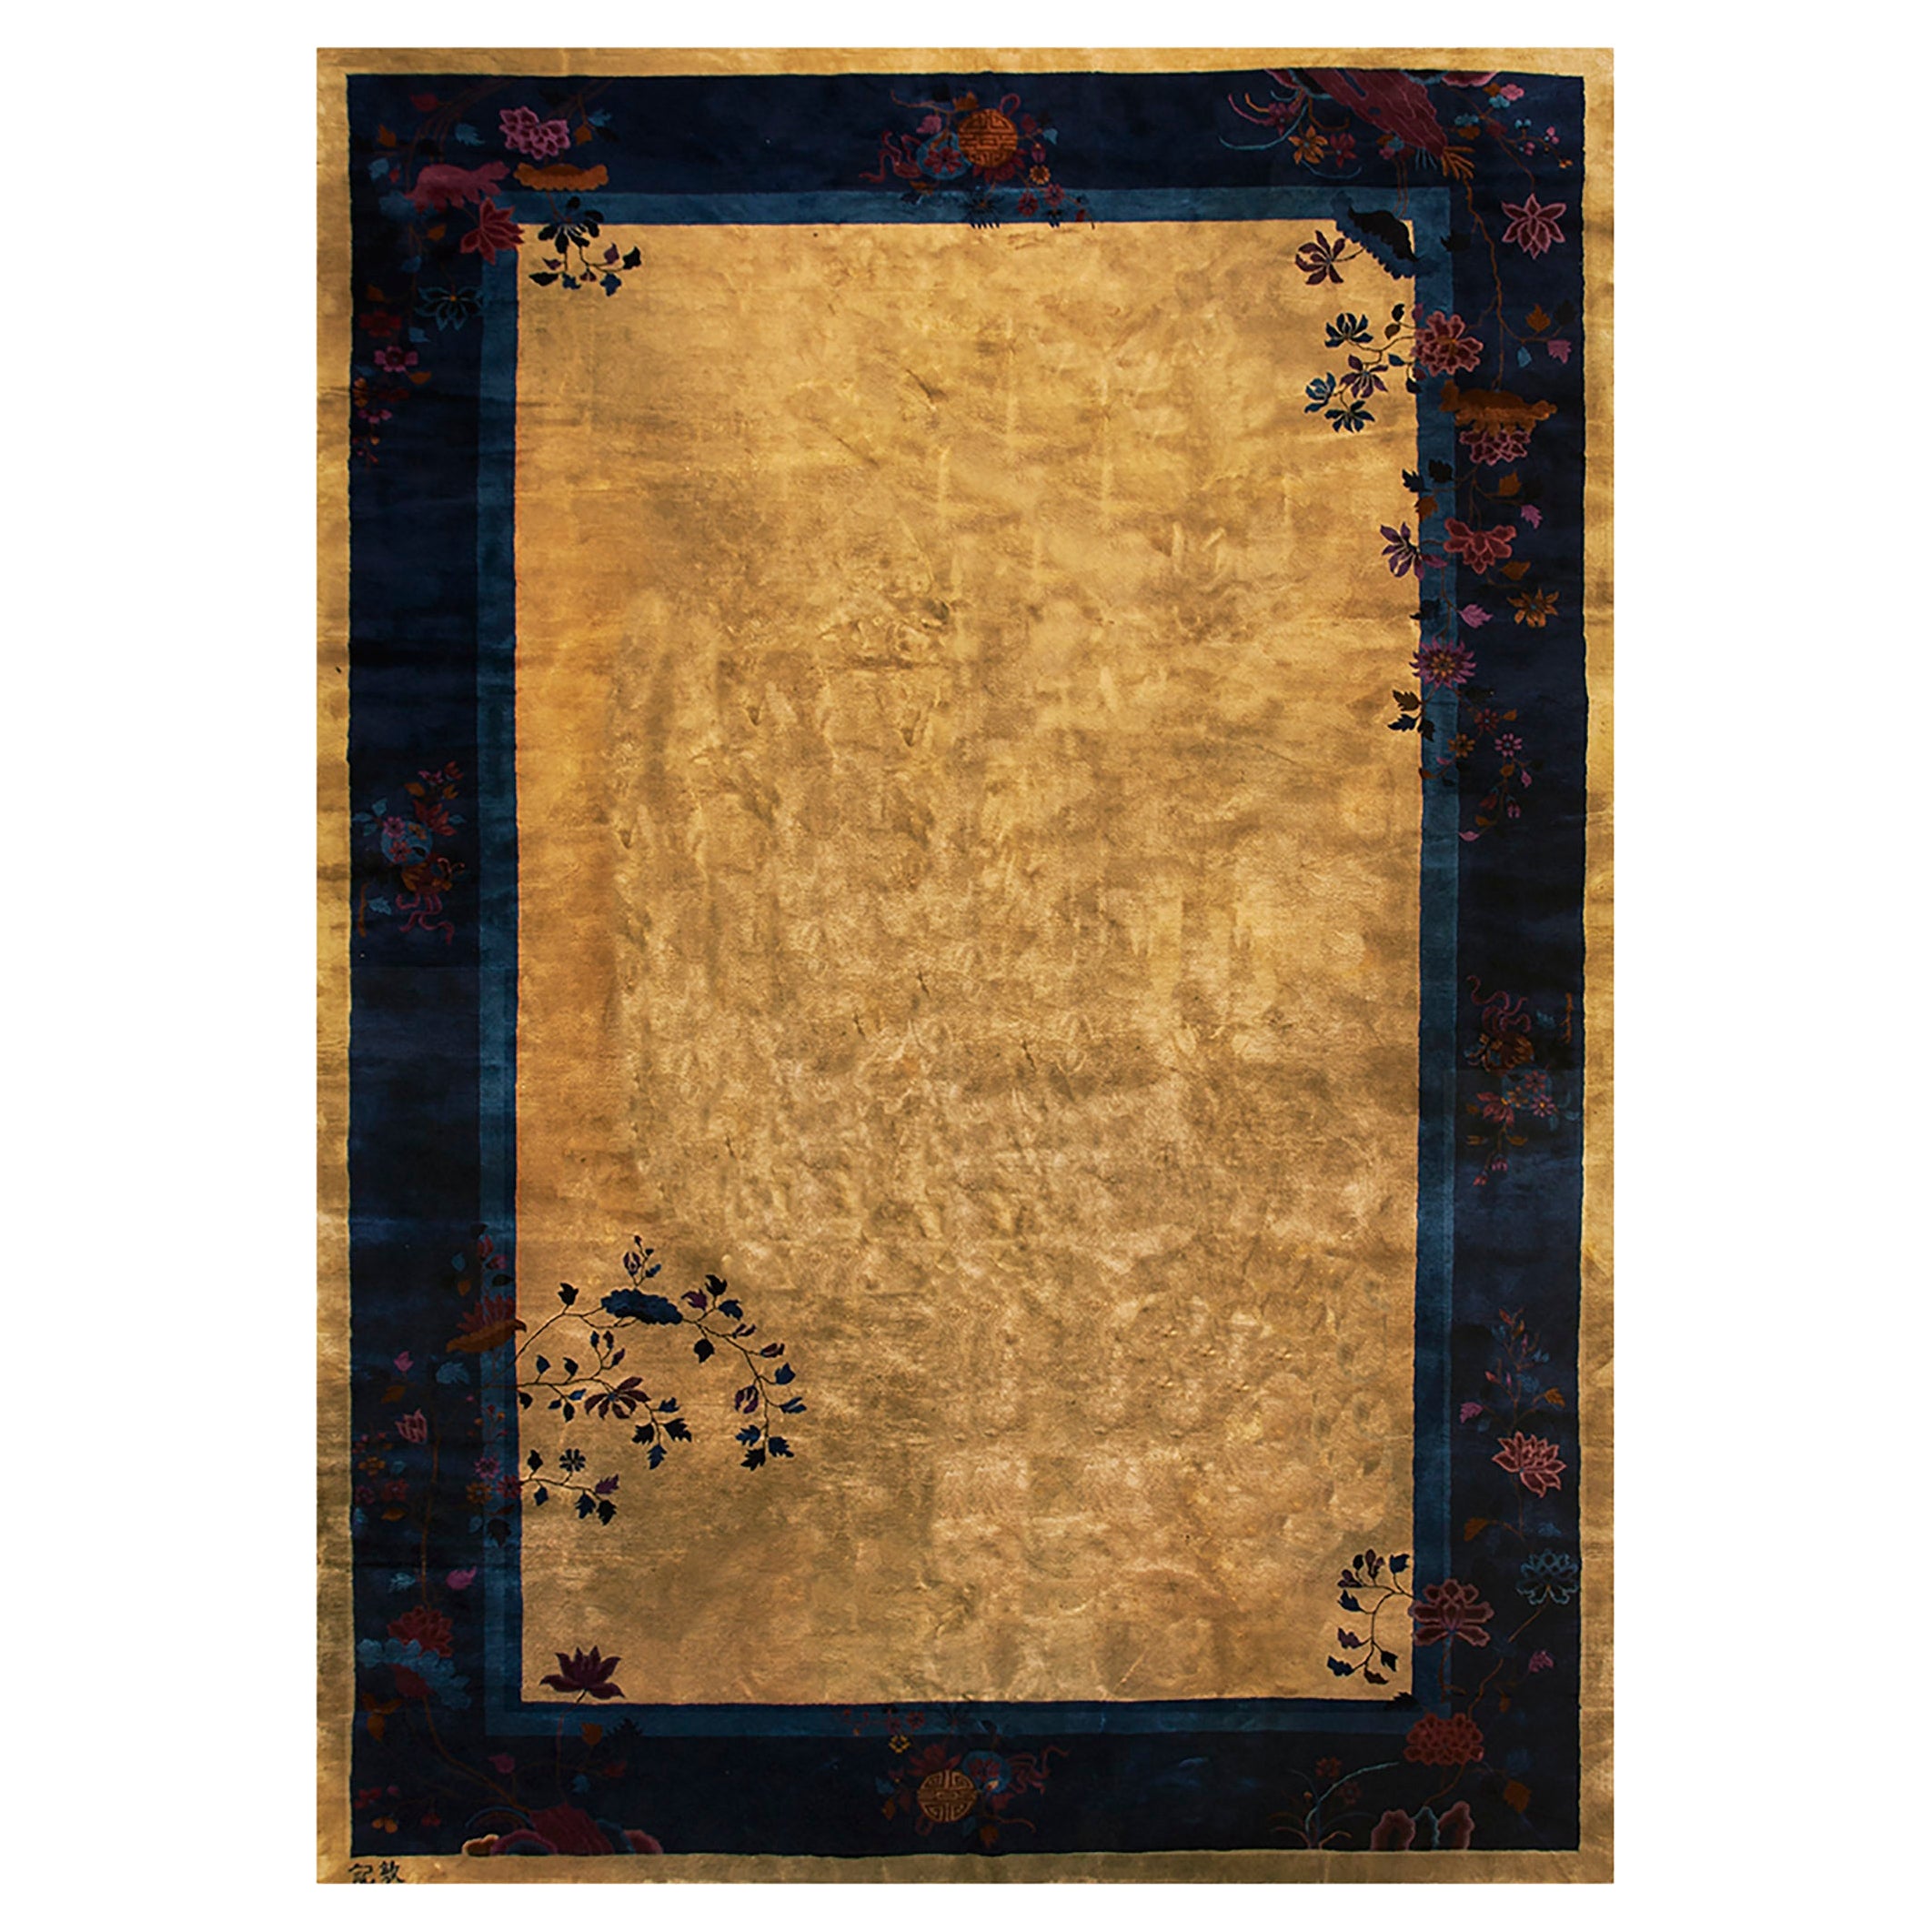 1920s Chinese Art Deco Carpet ( 11' 1" x 16' 3" - 337 x 495 cm ) For Sale